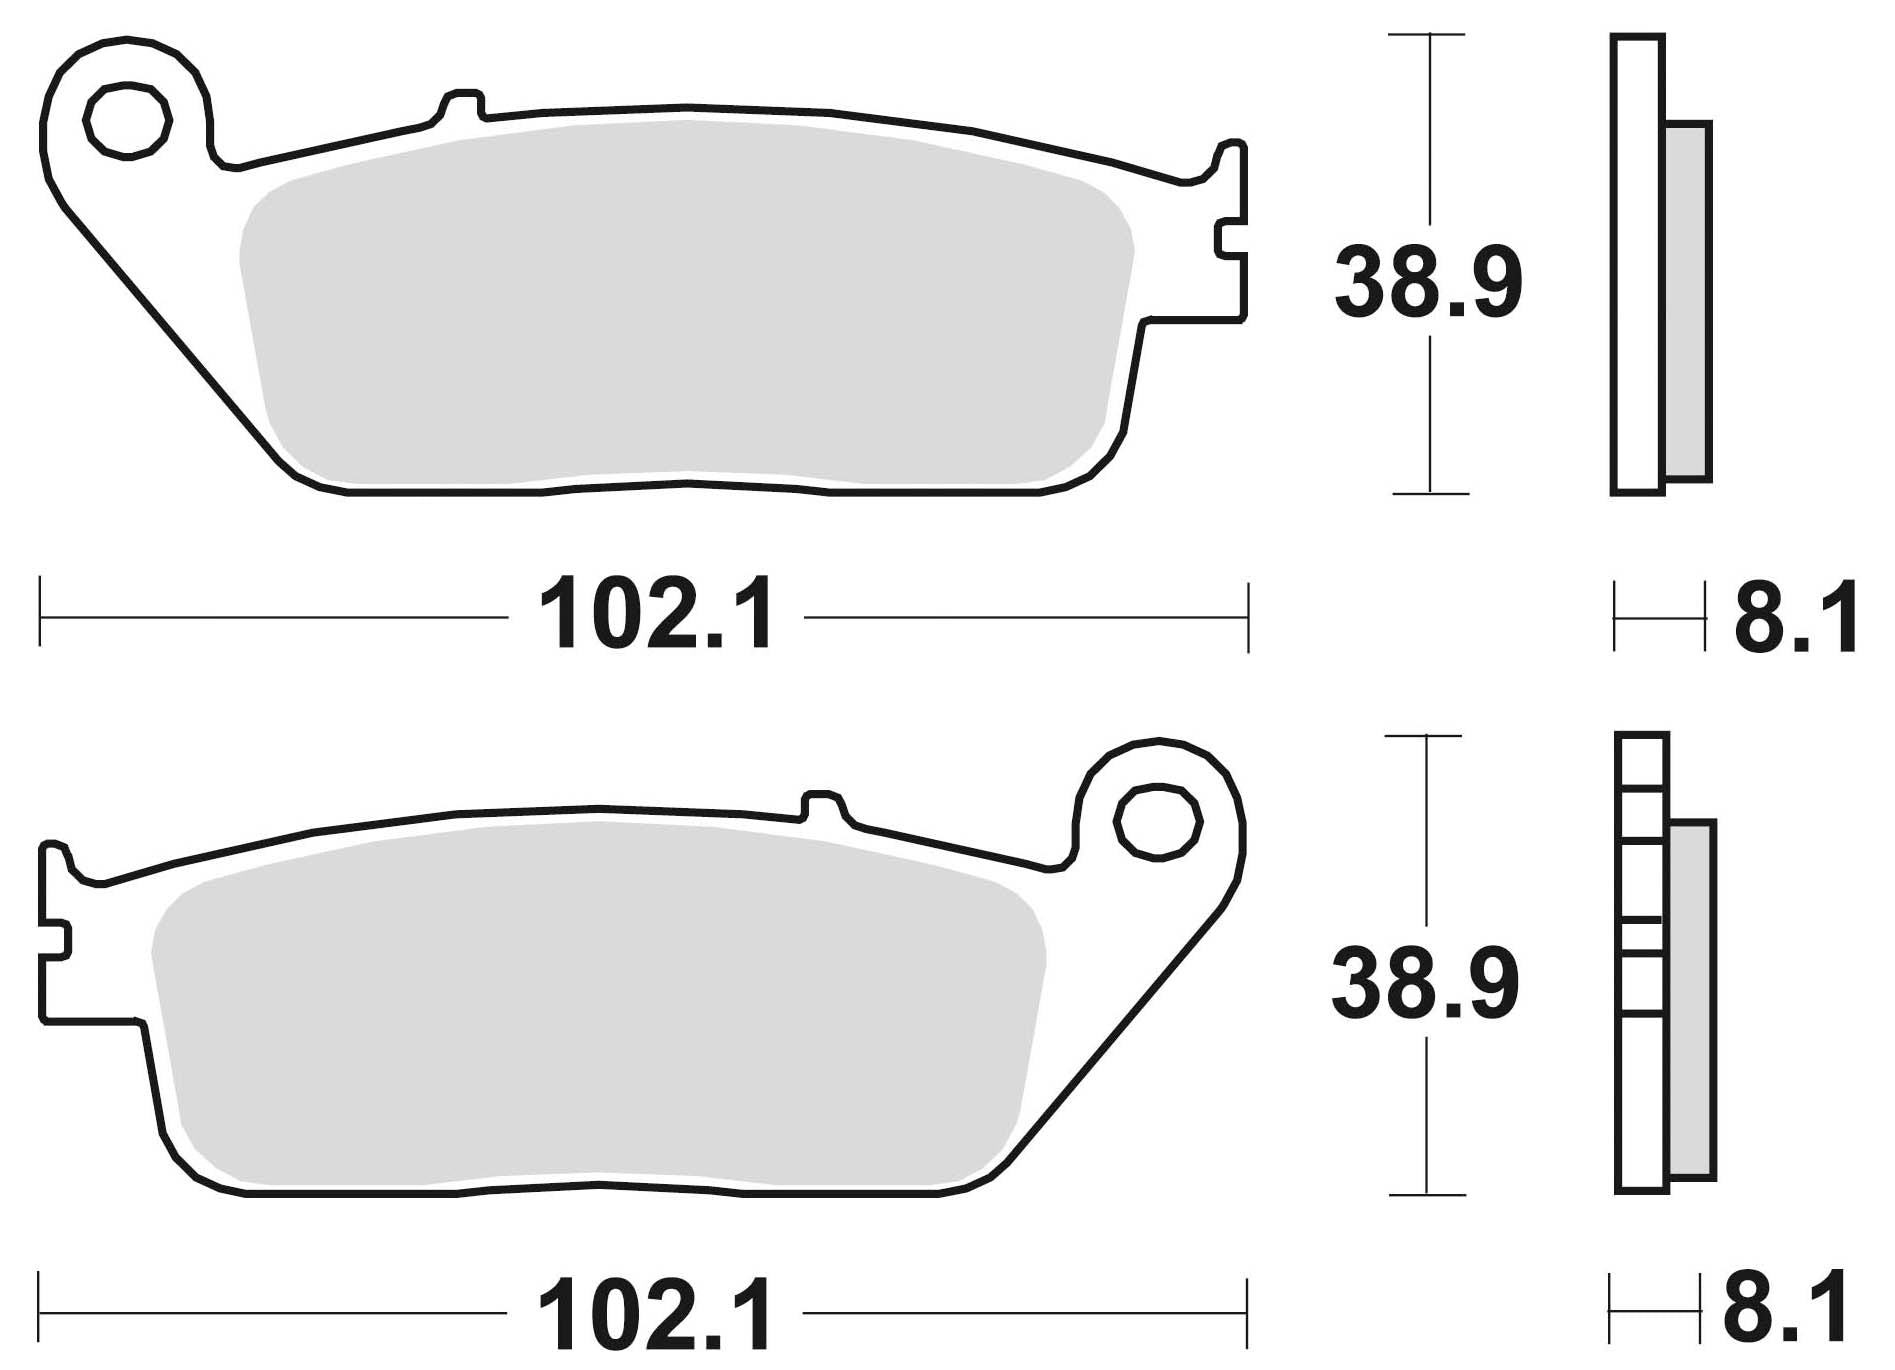 720CM55 - Sintered Pads - Braking Brakes - LRL Motors